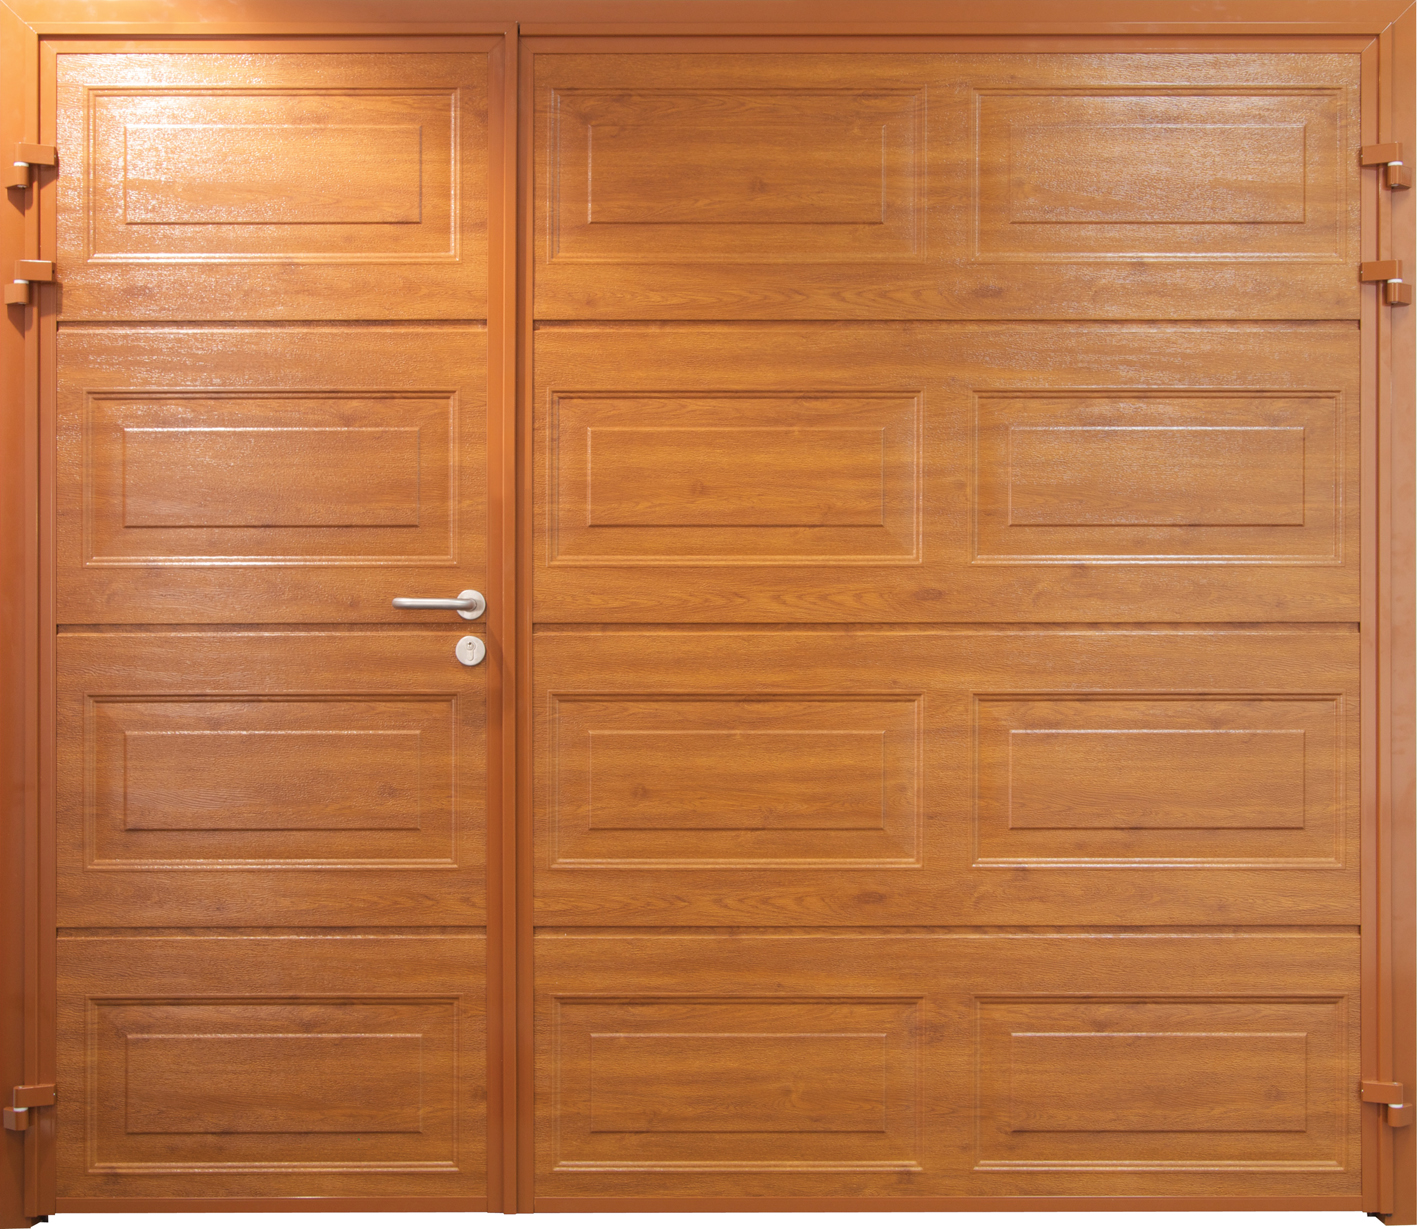 Picture of pair of Carteck Georgian Horizontal Side-hinged garage doors in Golden Oak laminate finish